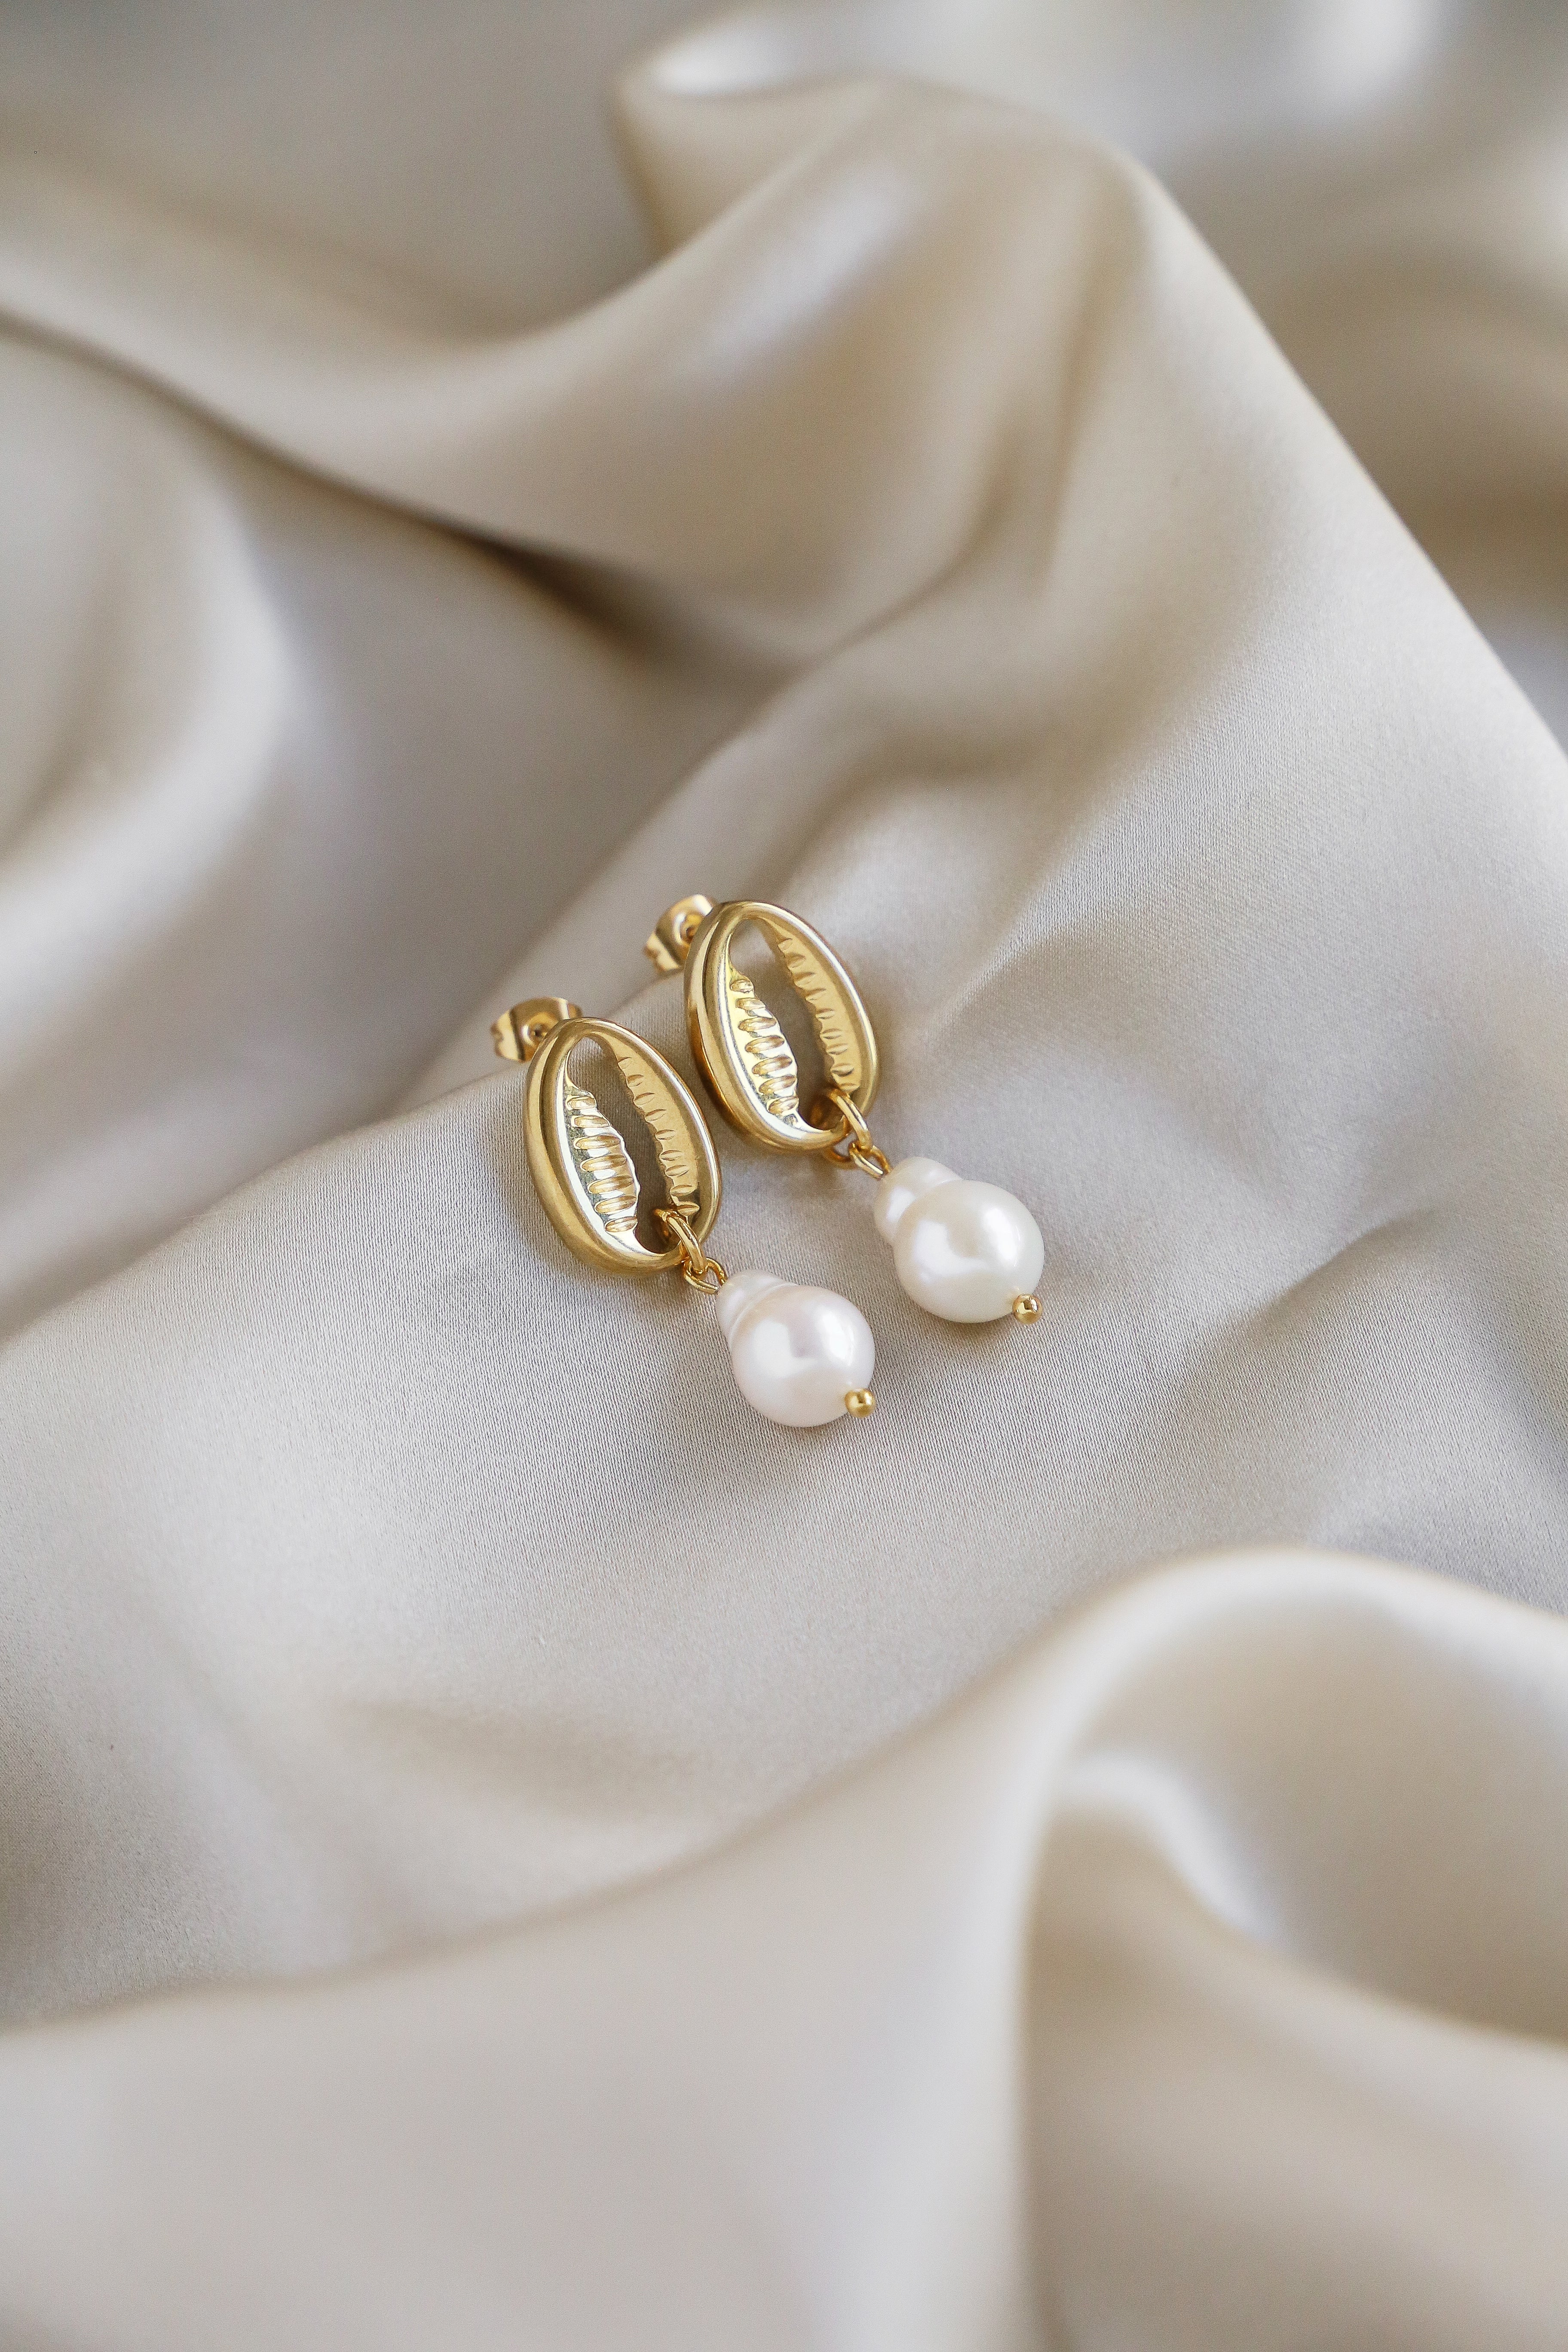 Maria Earrings - Boutique Minimaliste has waterproof, durable, elegant and vintage inspired jewelry